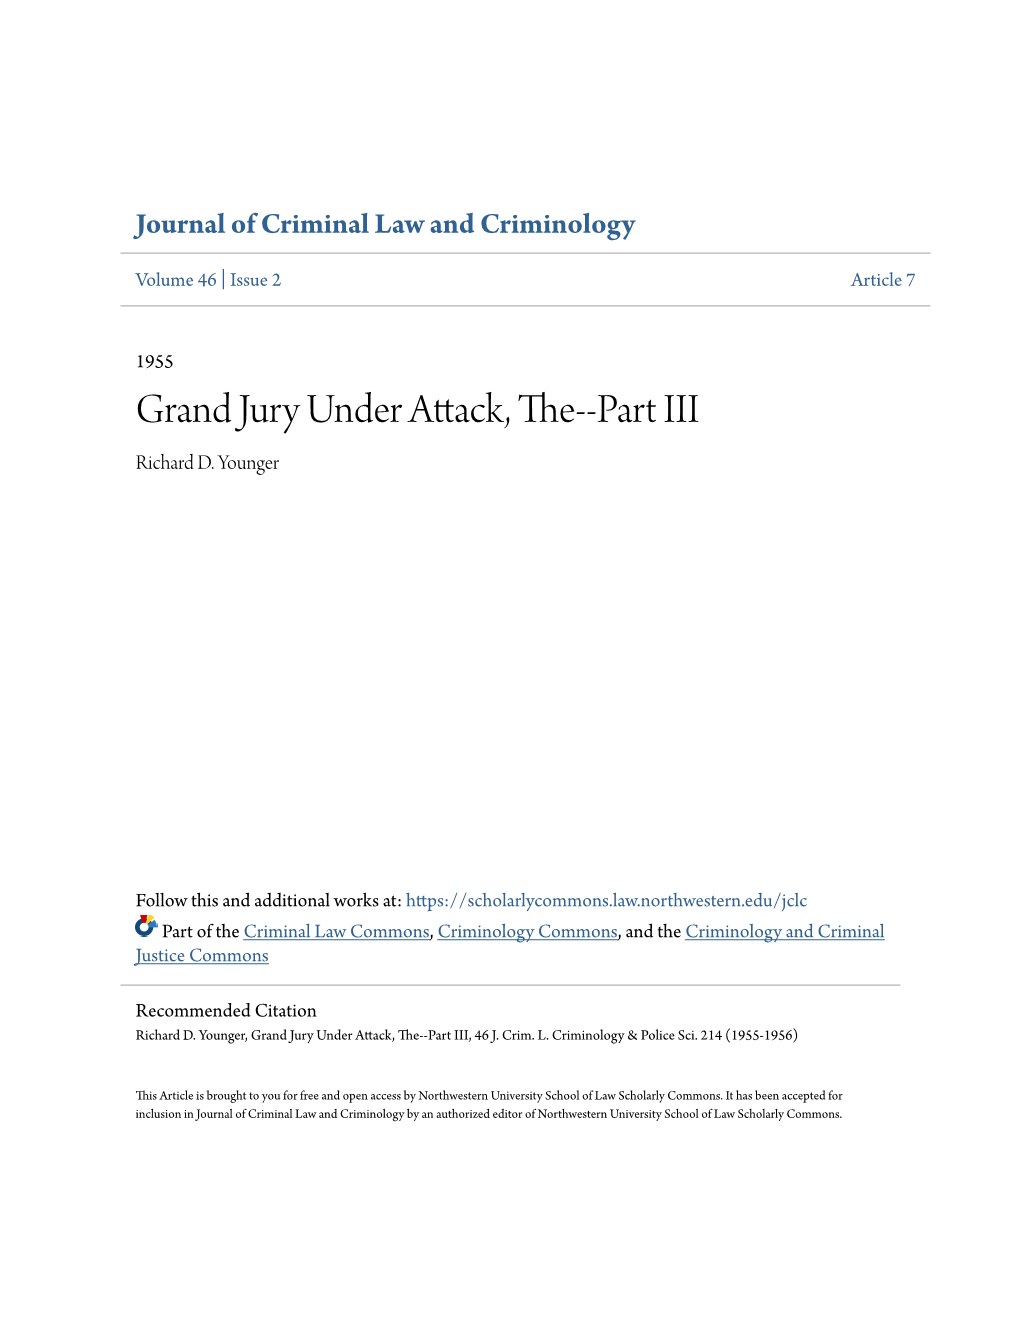 Grand Jury Under Attack, The--Part III Richard D